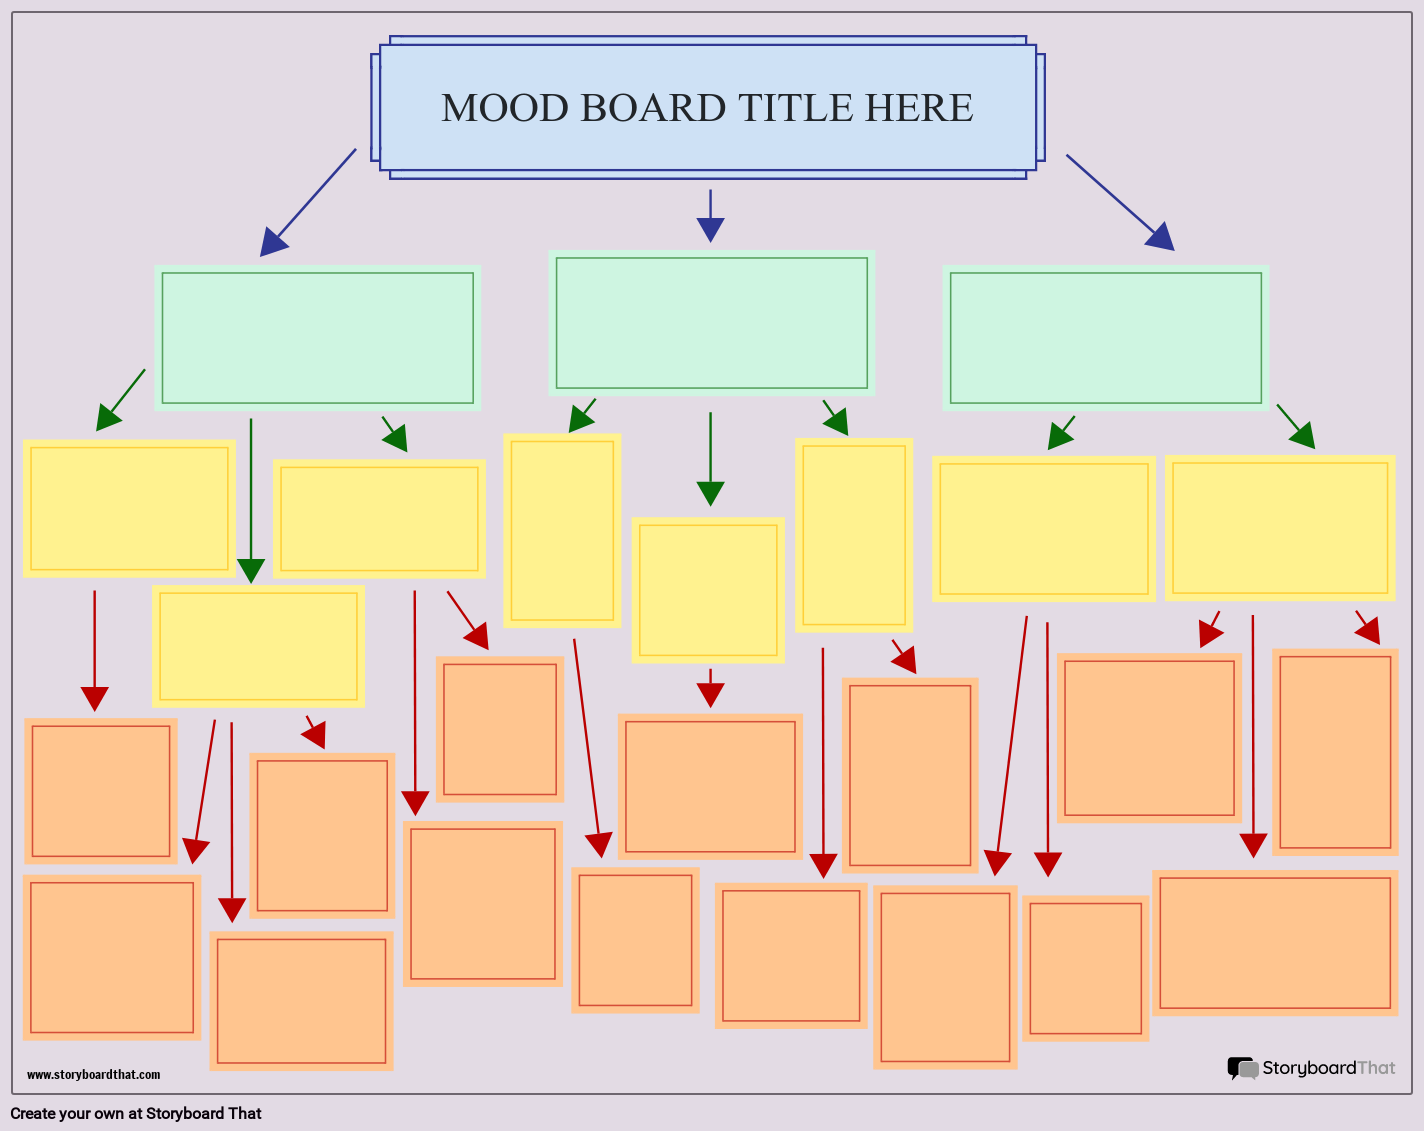 Corporate Mood Board Template 3